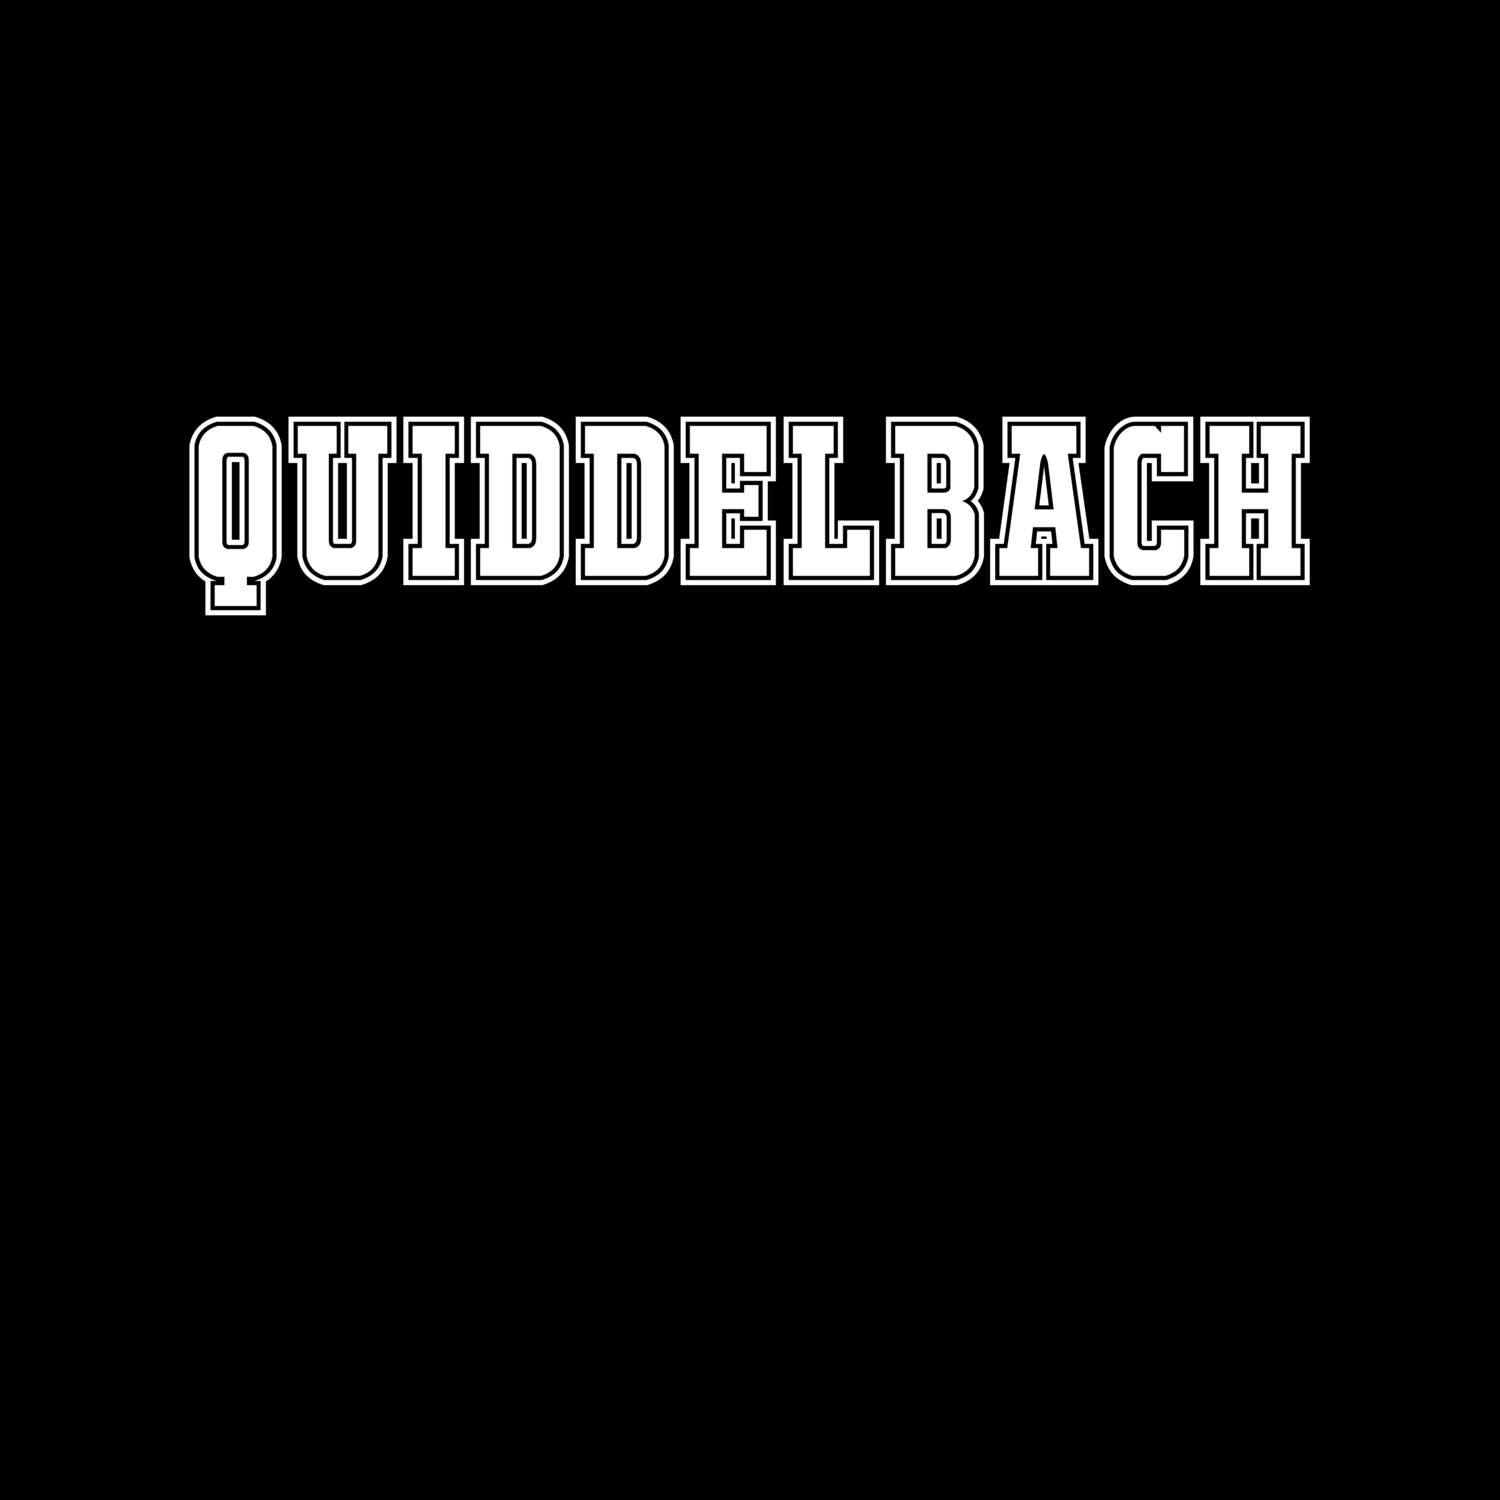 Quiddelbach T-Shirt »Classic«